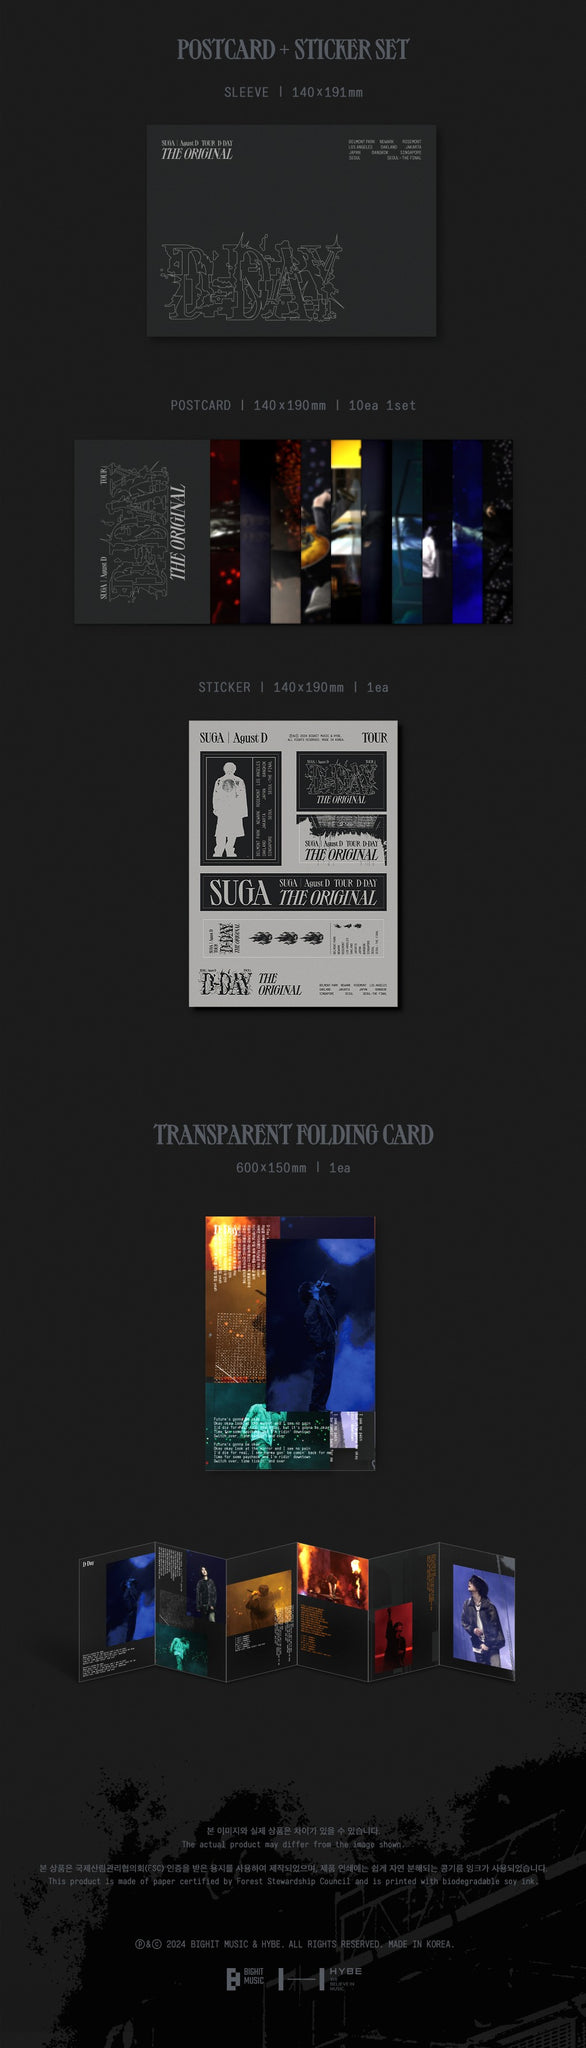 Agust D TOUR 'D-DAY' The Original Inclusions: Postcard Set, Sticker, Transparent Folding Card